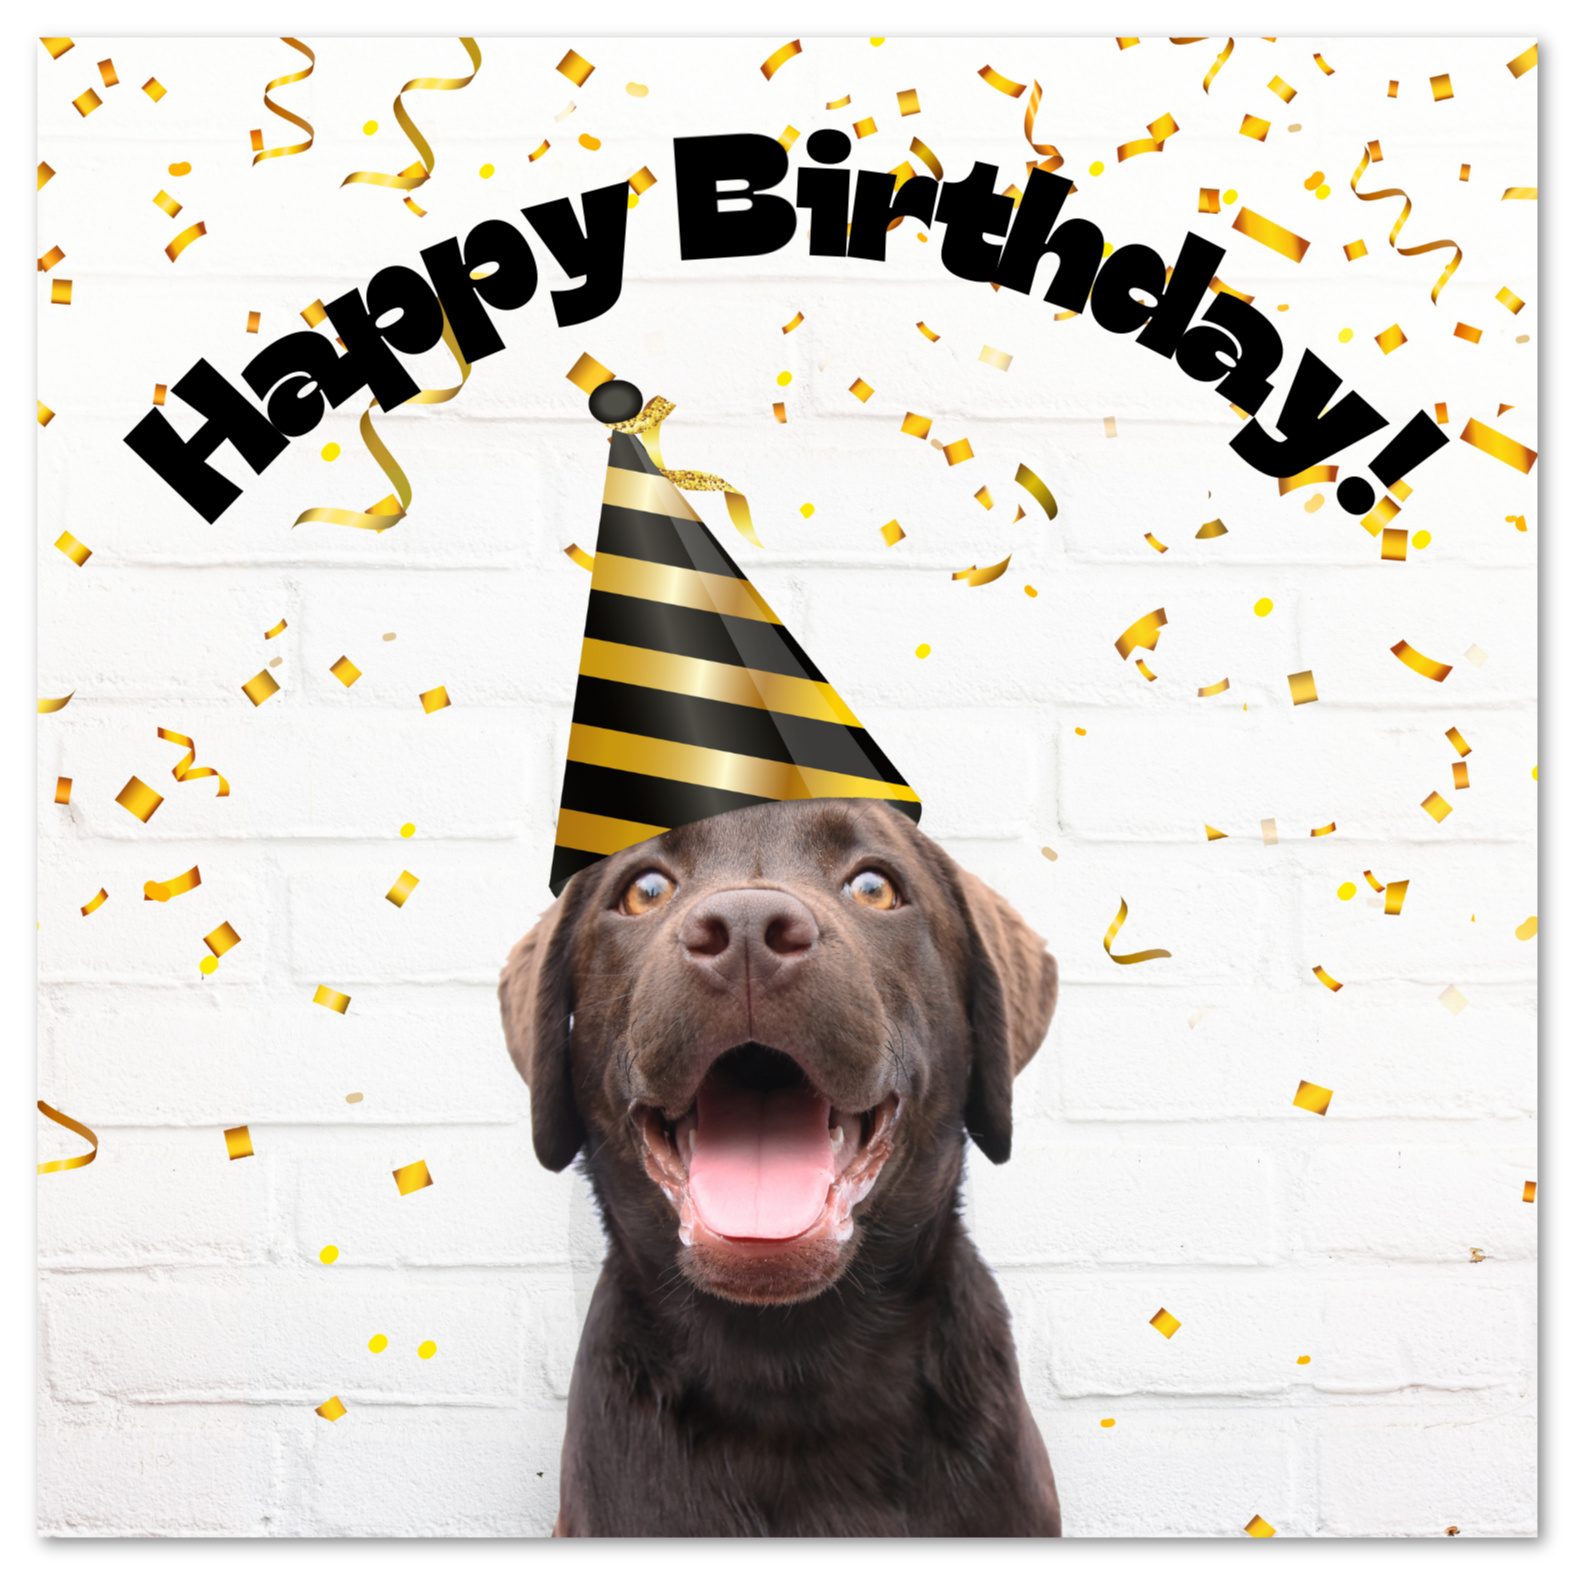 Printable Birthday Cards For Dogs - Printable World Holiday